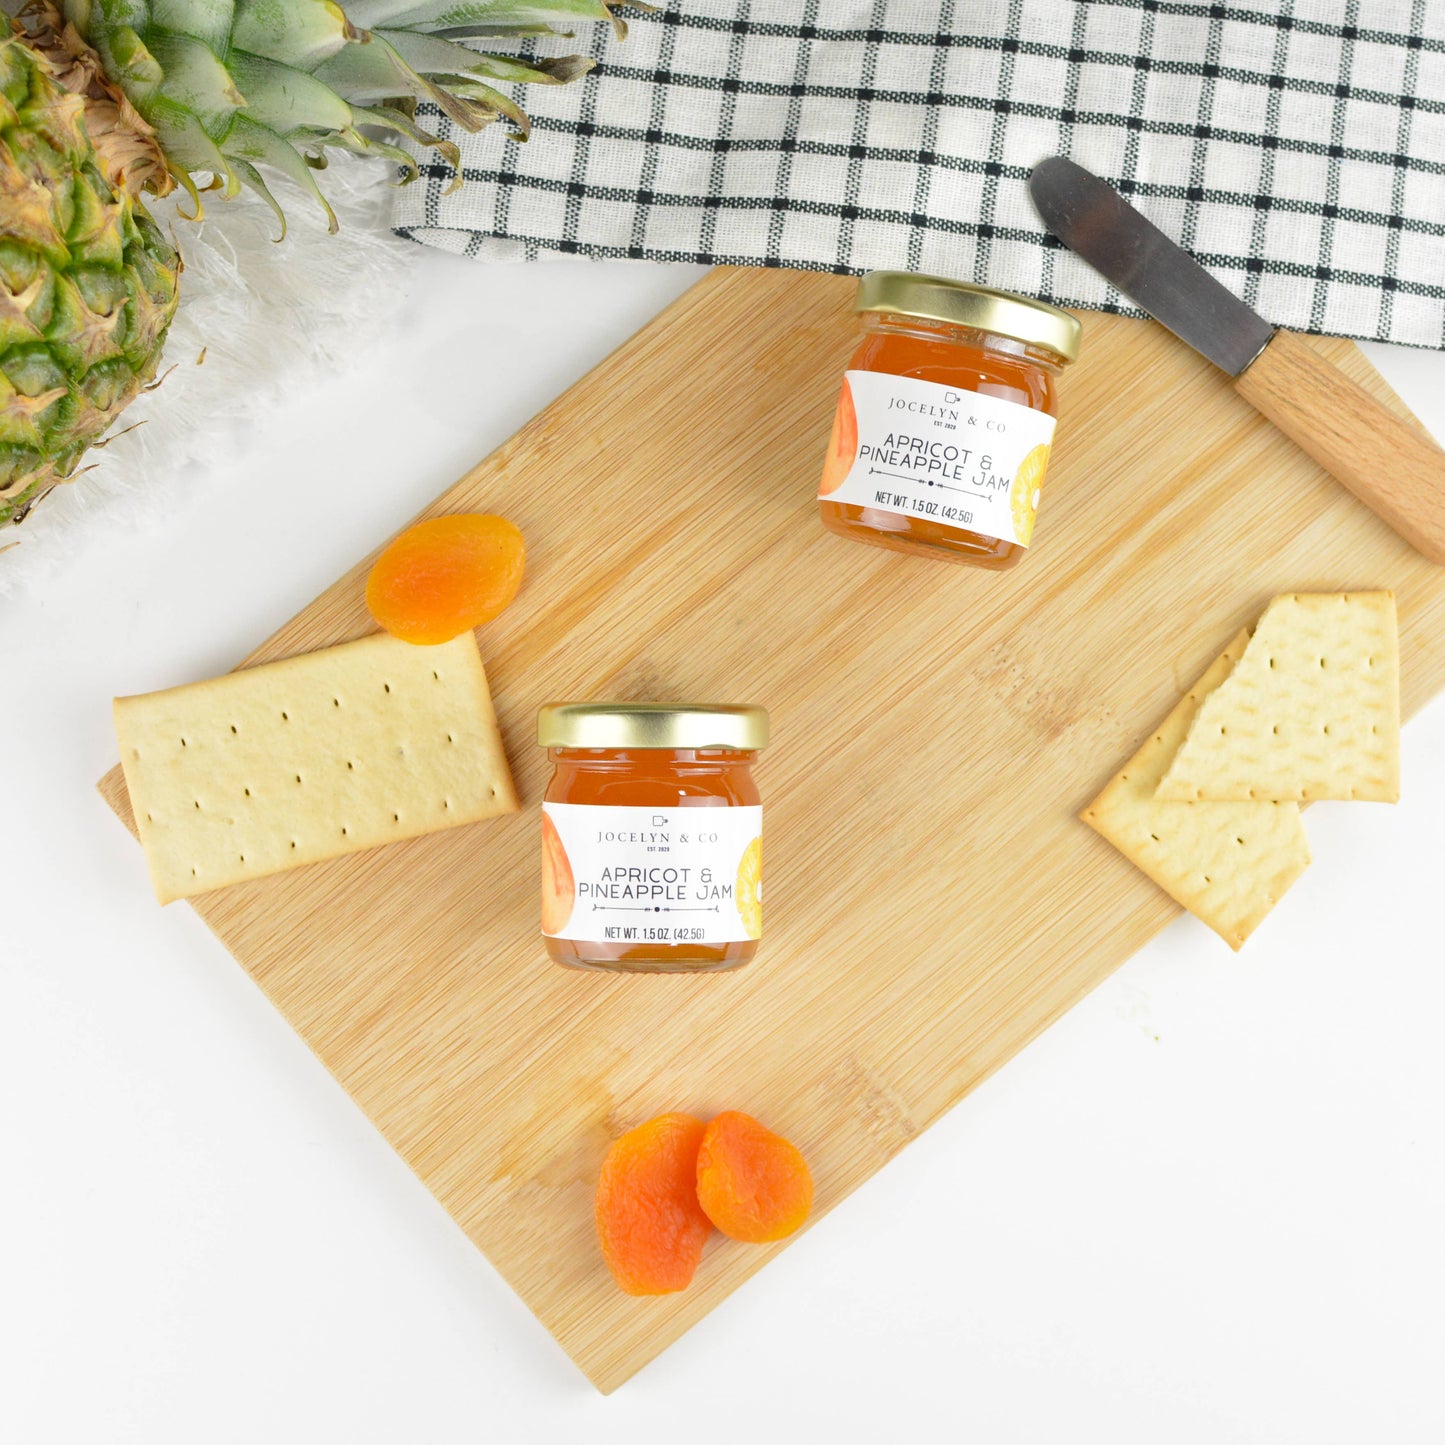 Apricot & Pineapple Jam